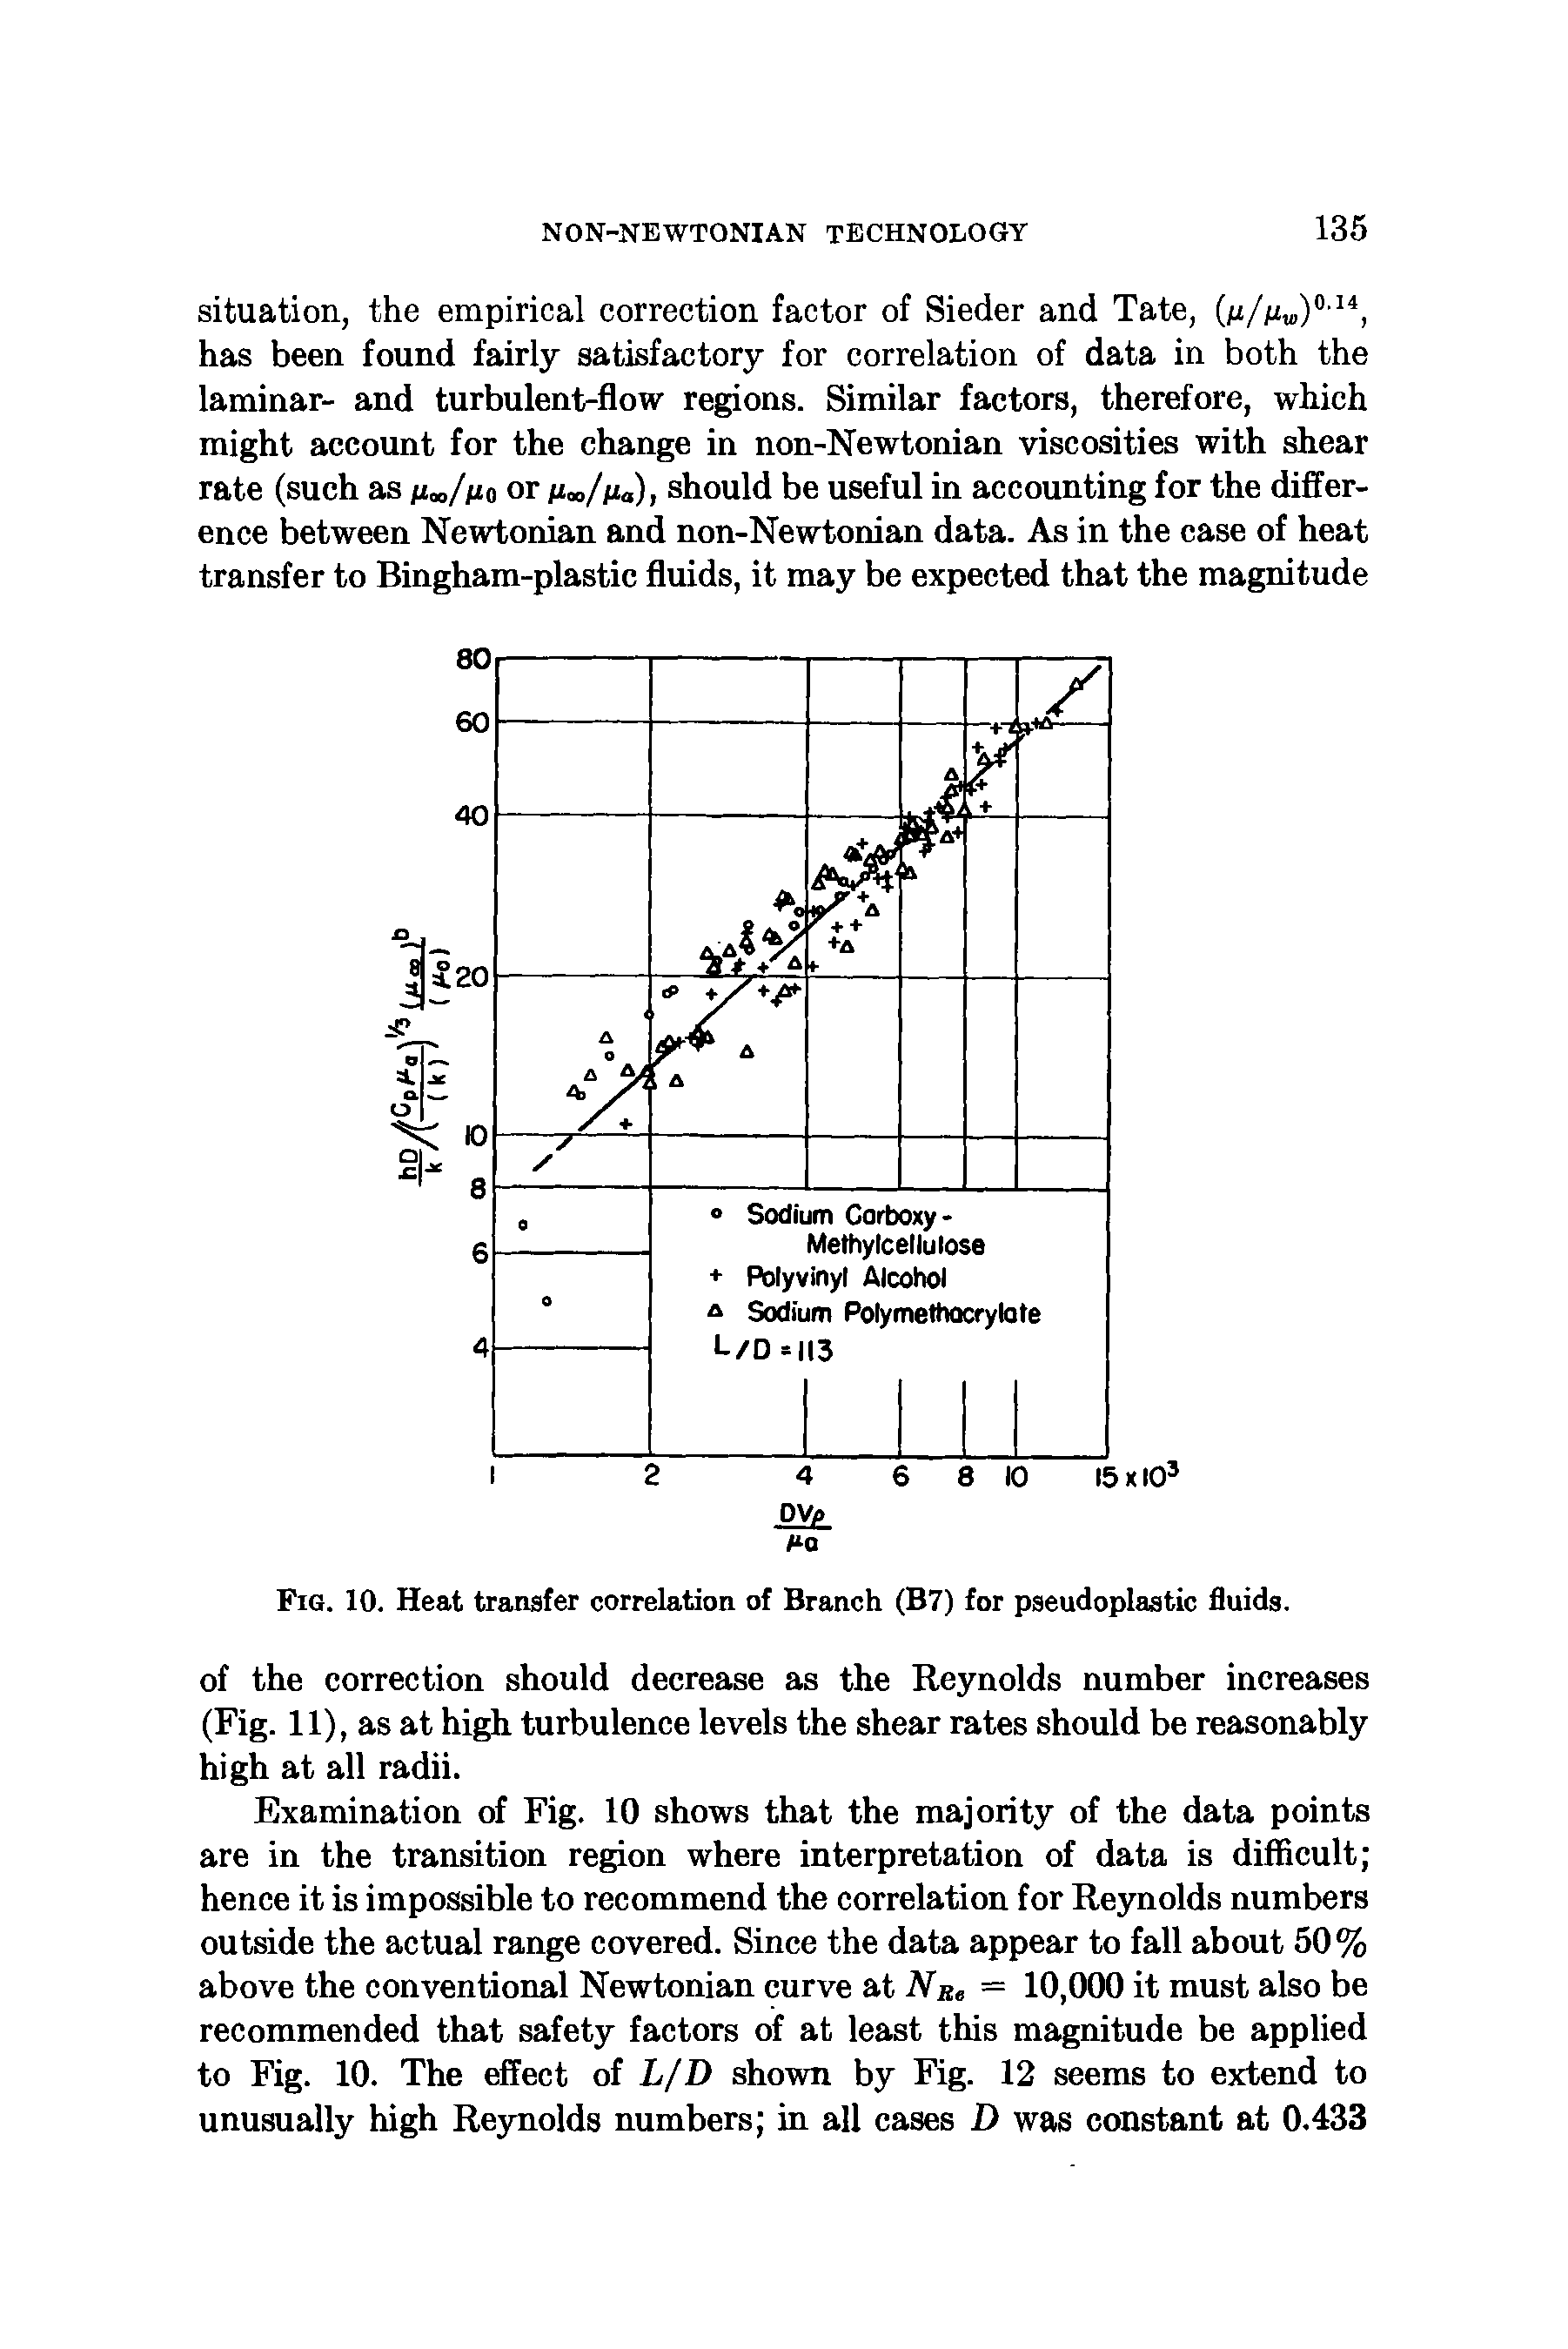 Fig. 10. Heat transfer correlation of Branch (B7) for pseudoplastic fluids.